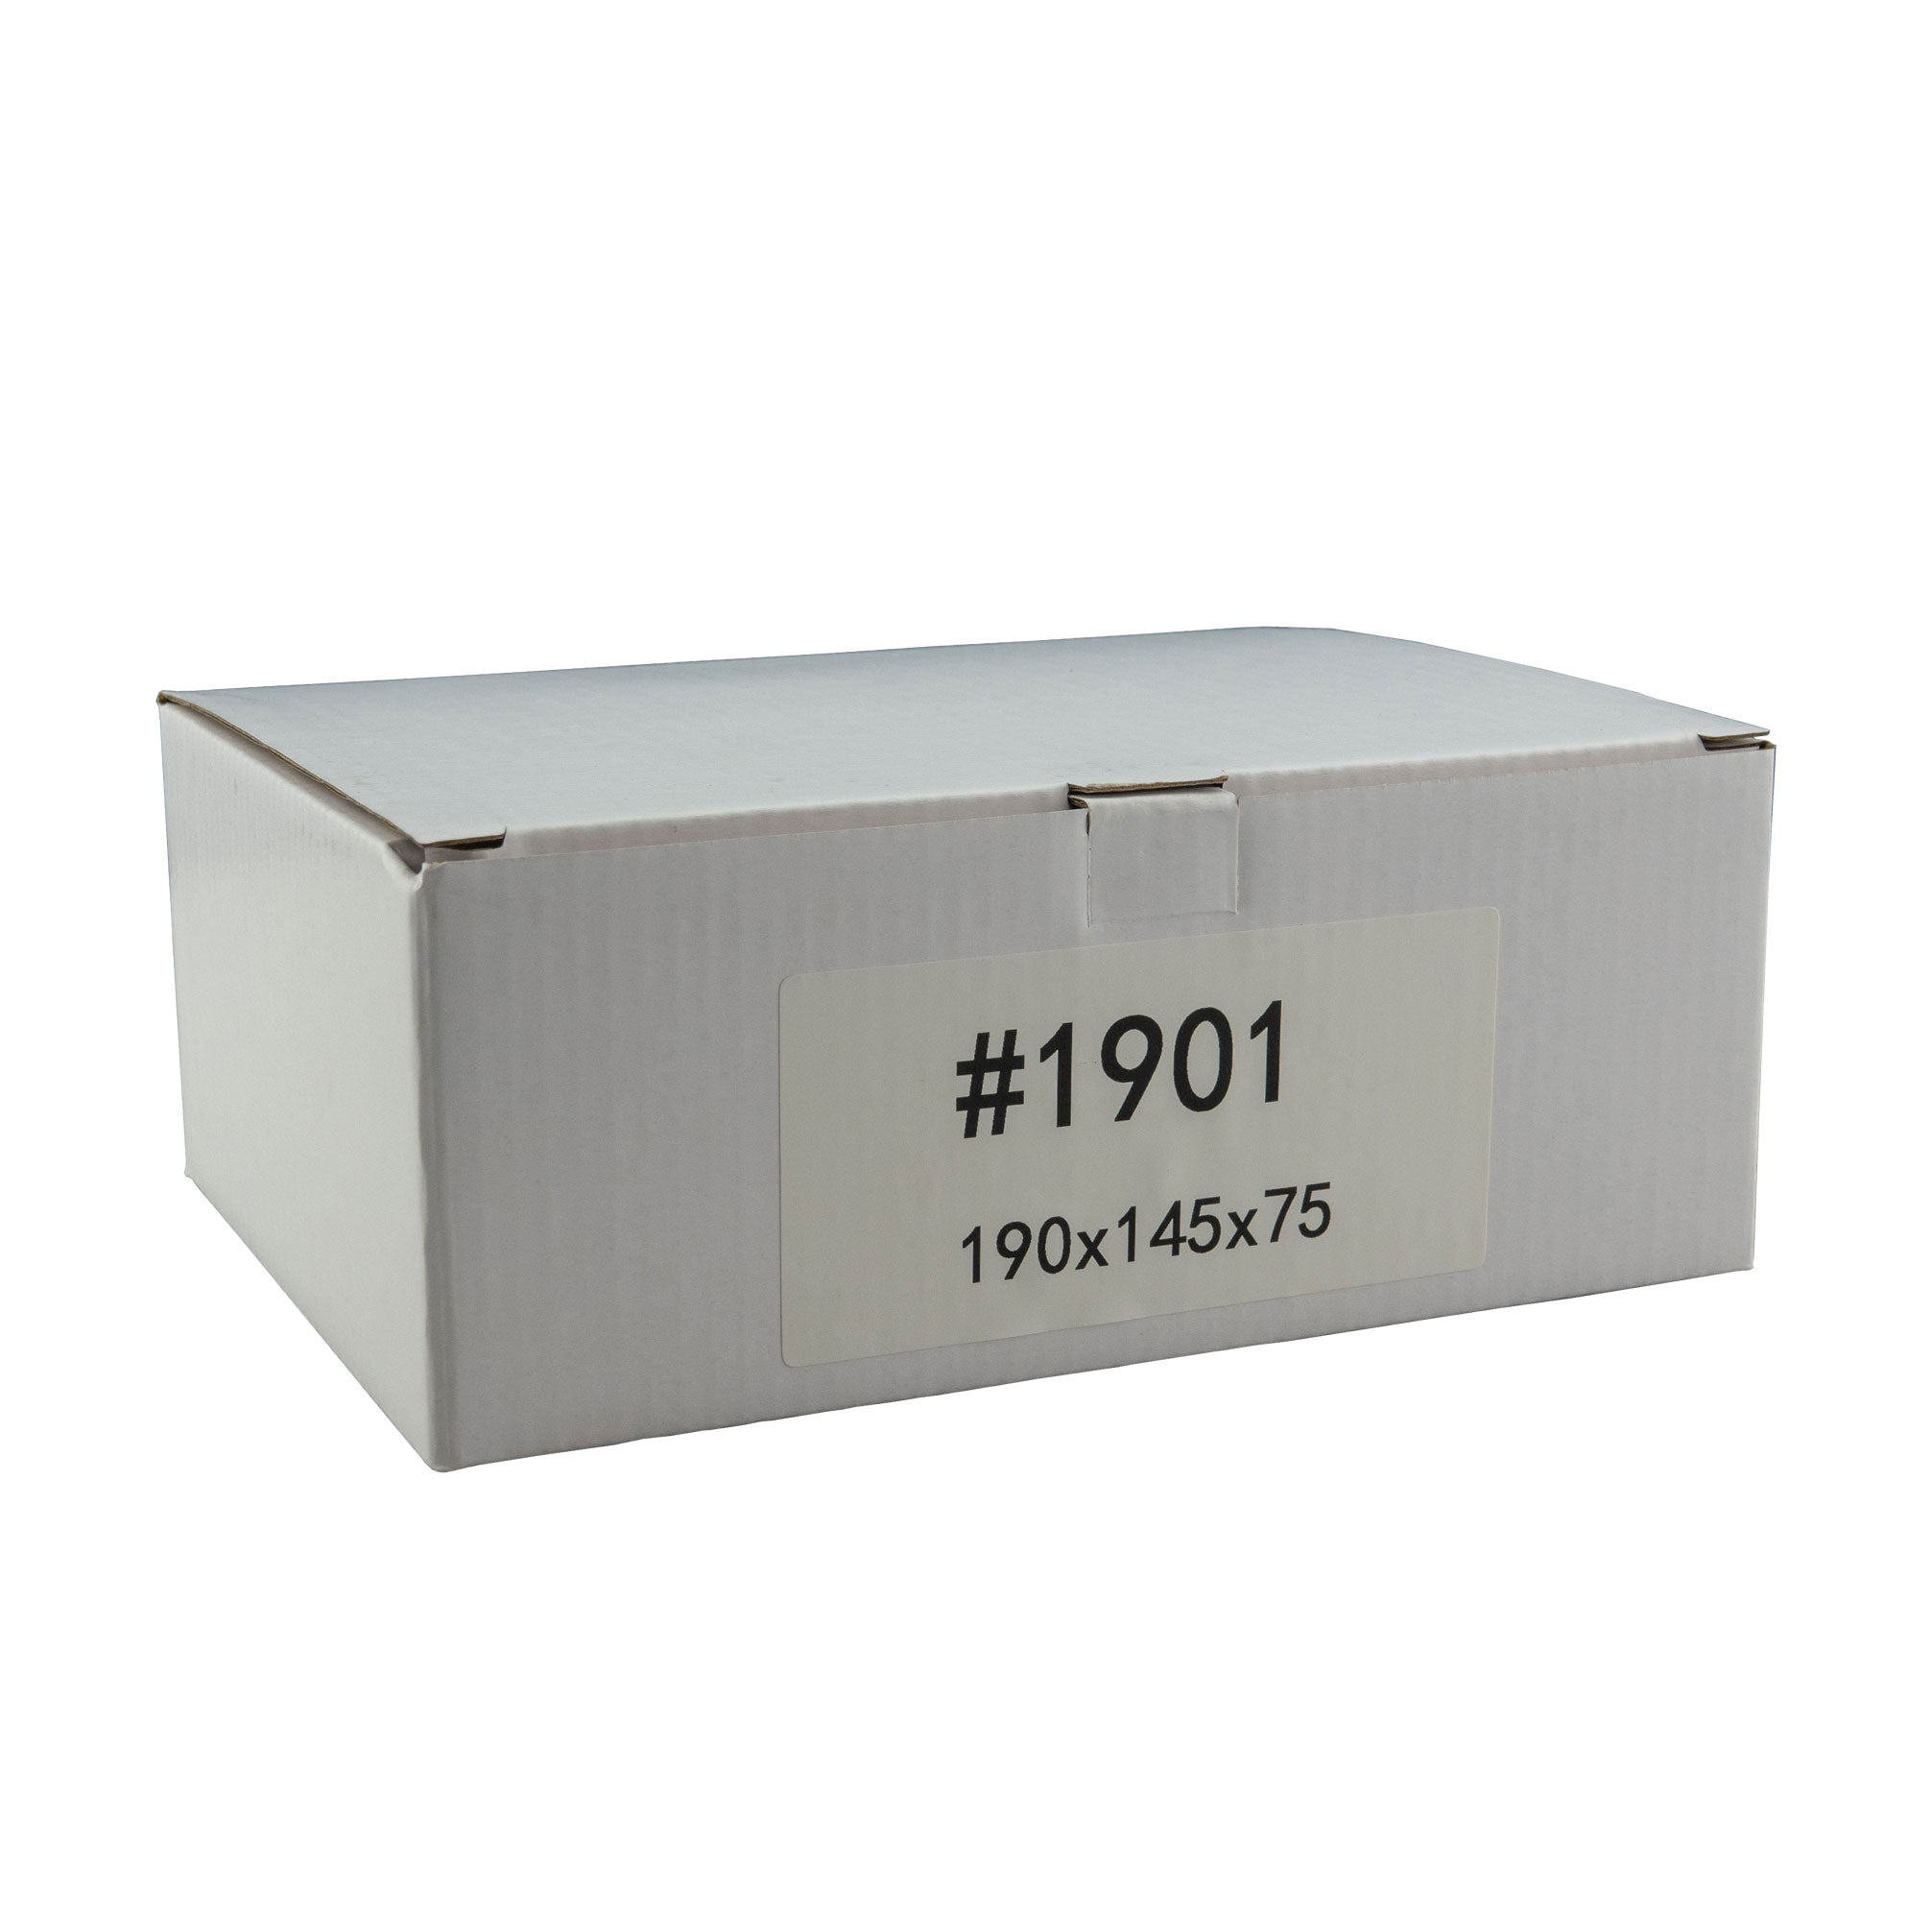 190mm x 145mm x 75mm White Carton Cardboard Shipping Box (#1901)